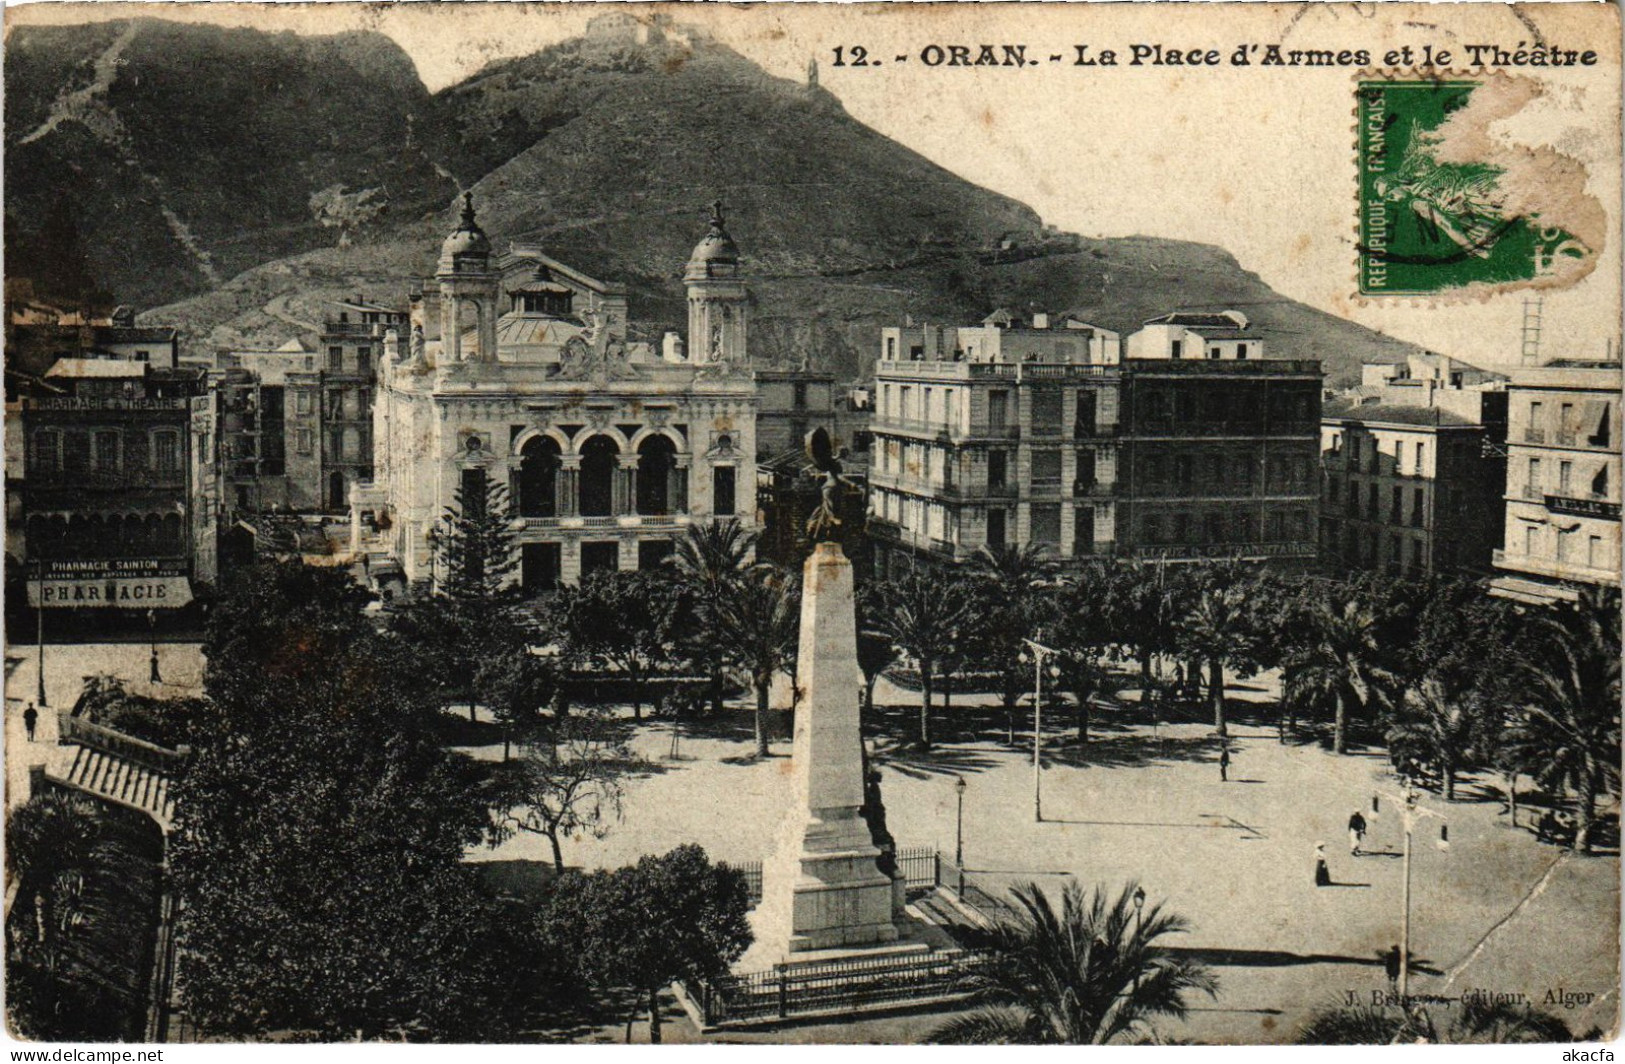 CPA AK ORAN Place D'Armes - Theatre ALGERIA (1389607) - Oran